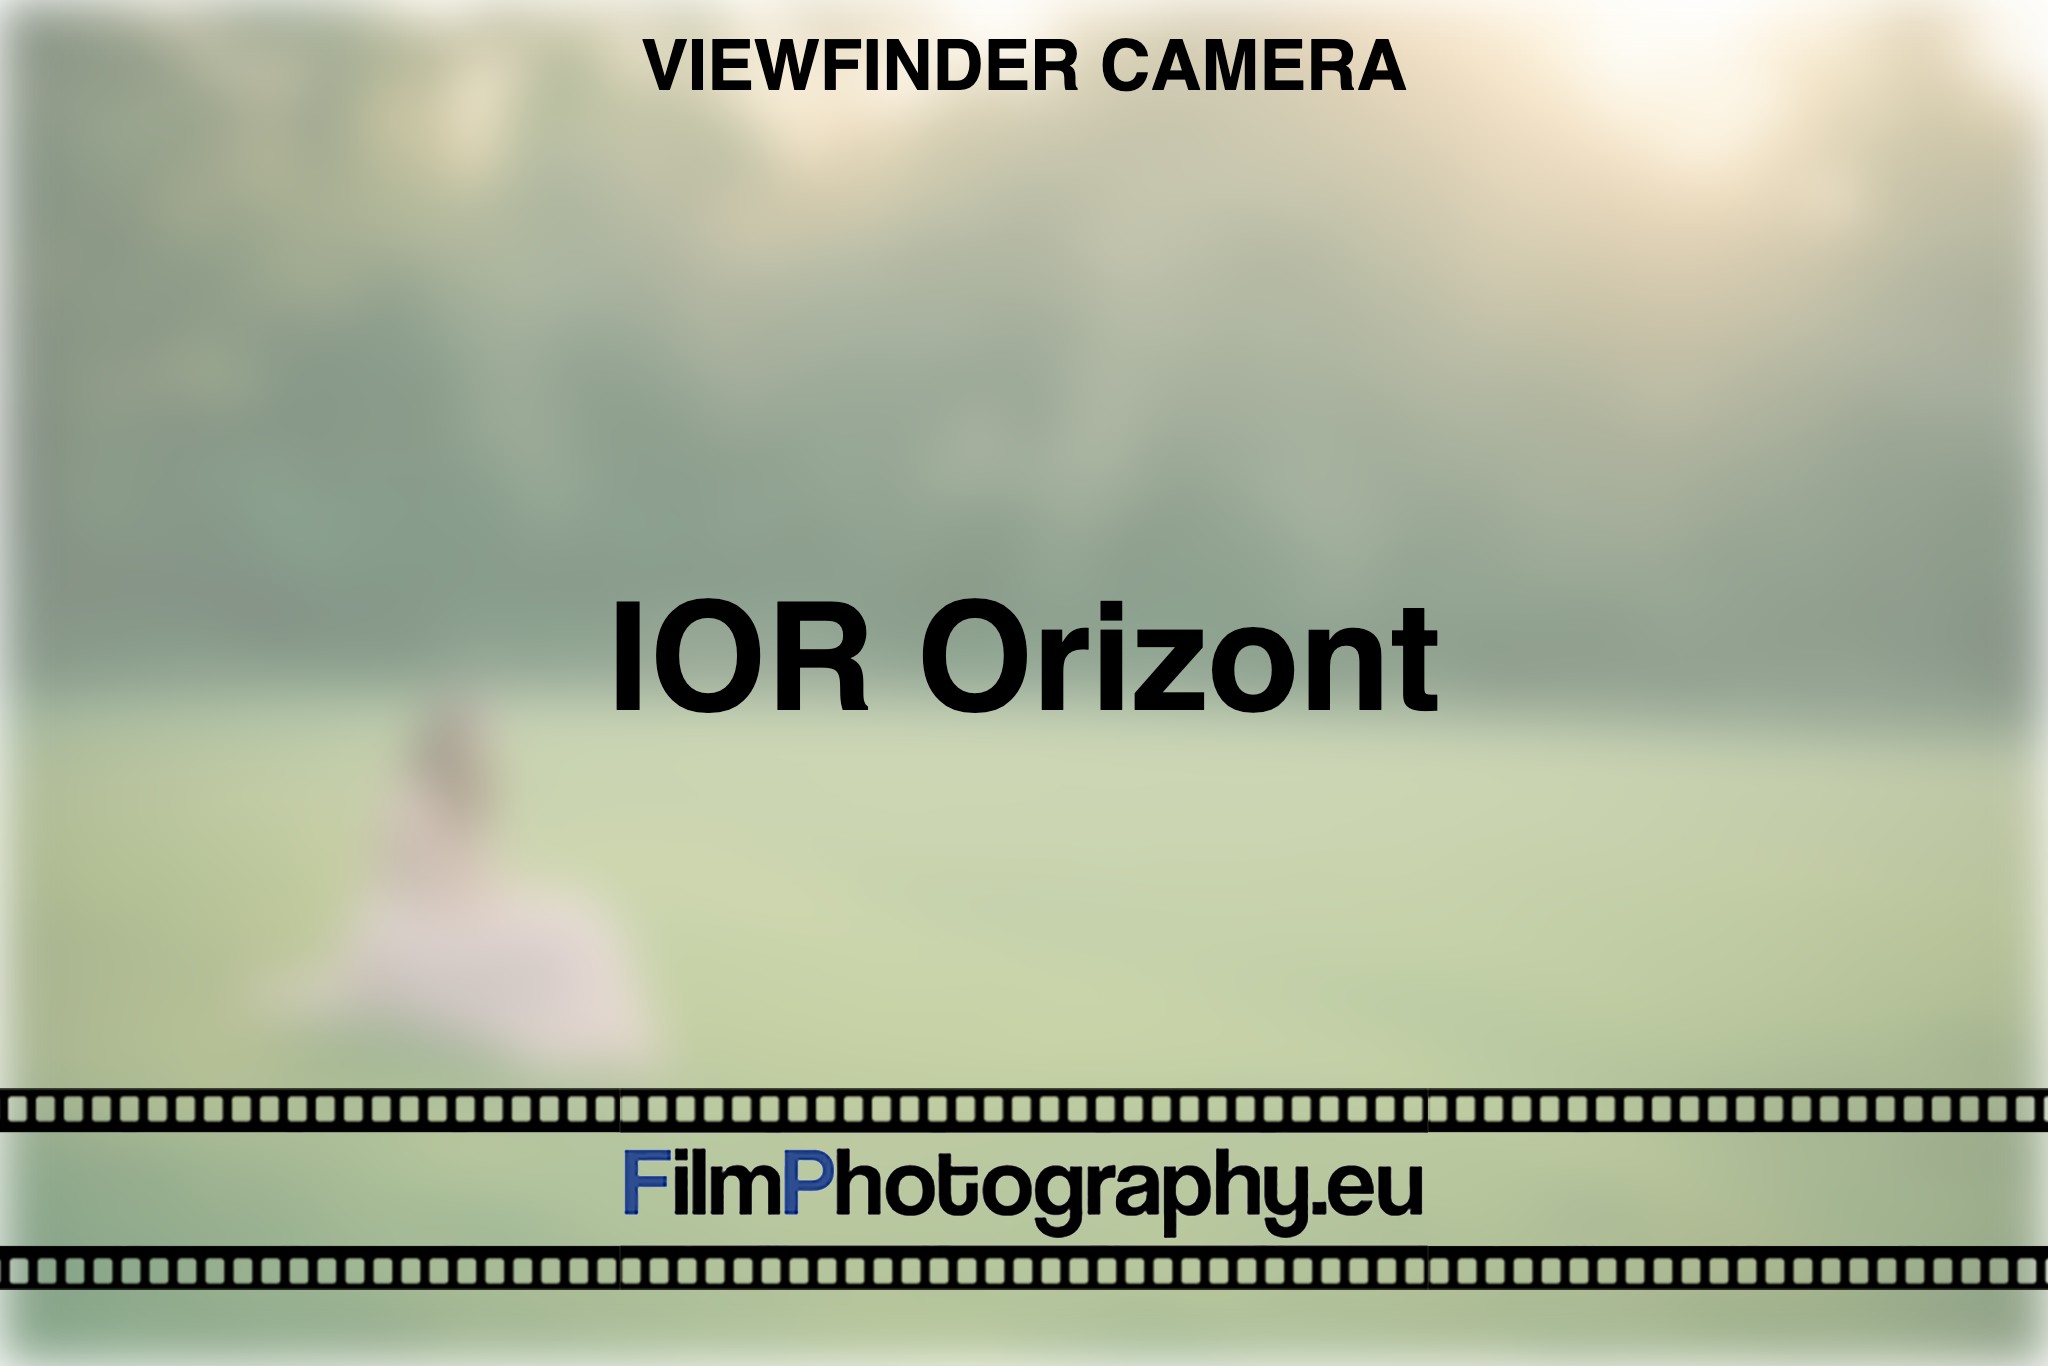 ior-orizont-viewfinder-camera-bnv